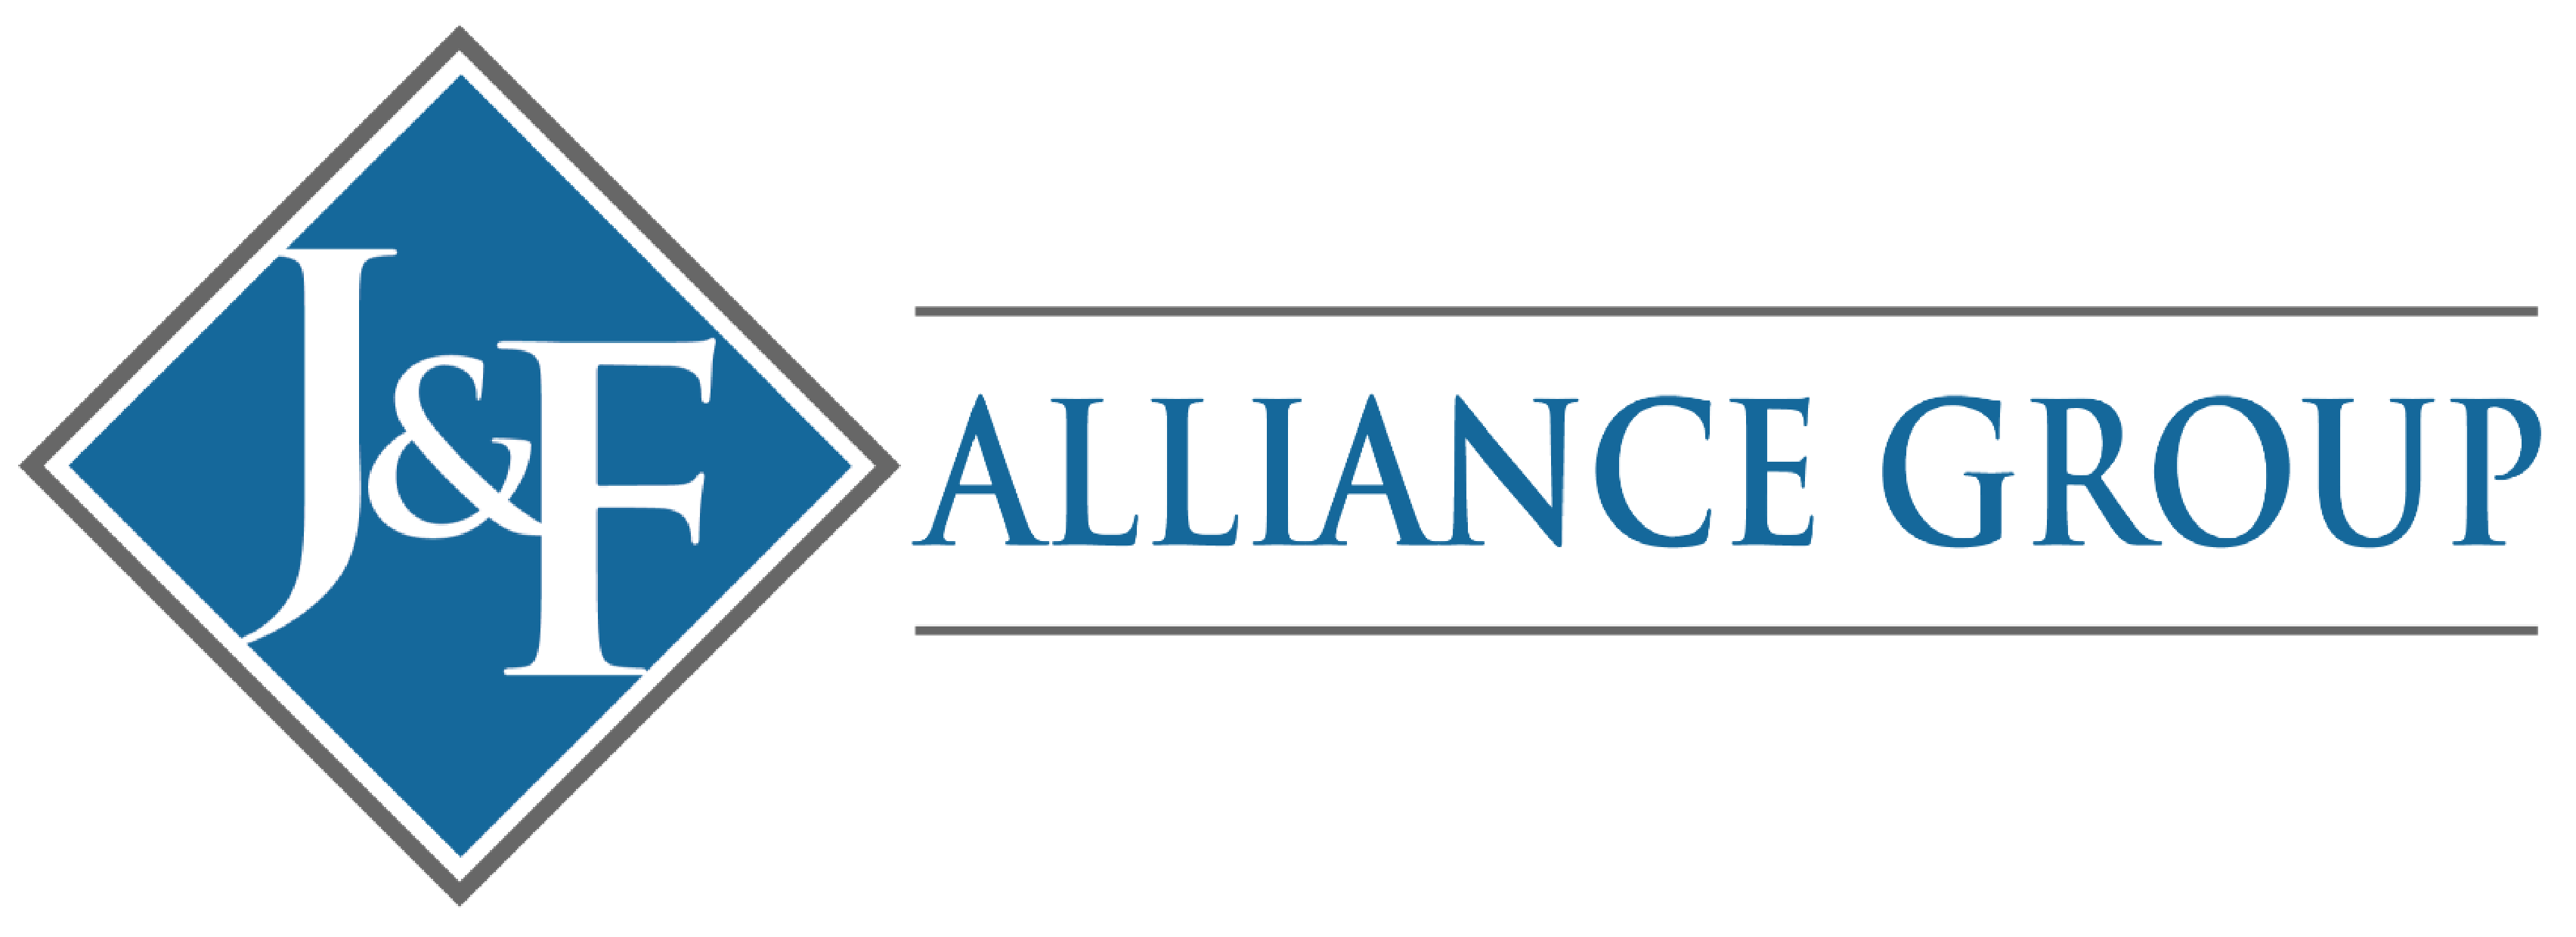 J&F Alliance Group, Inc.